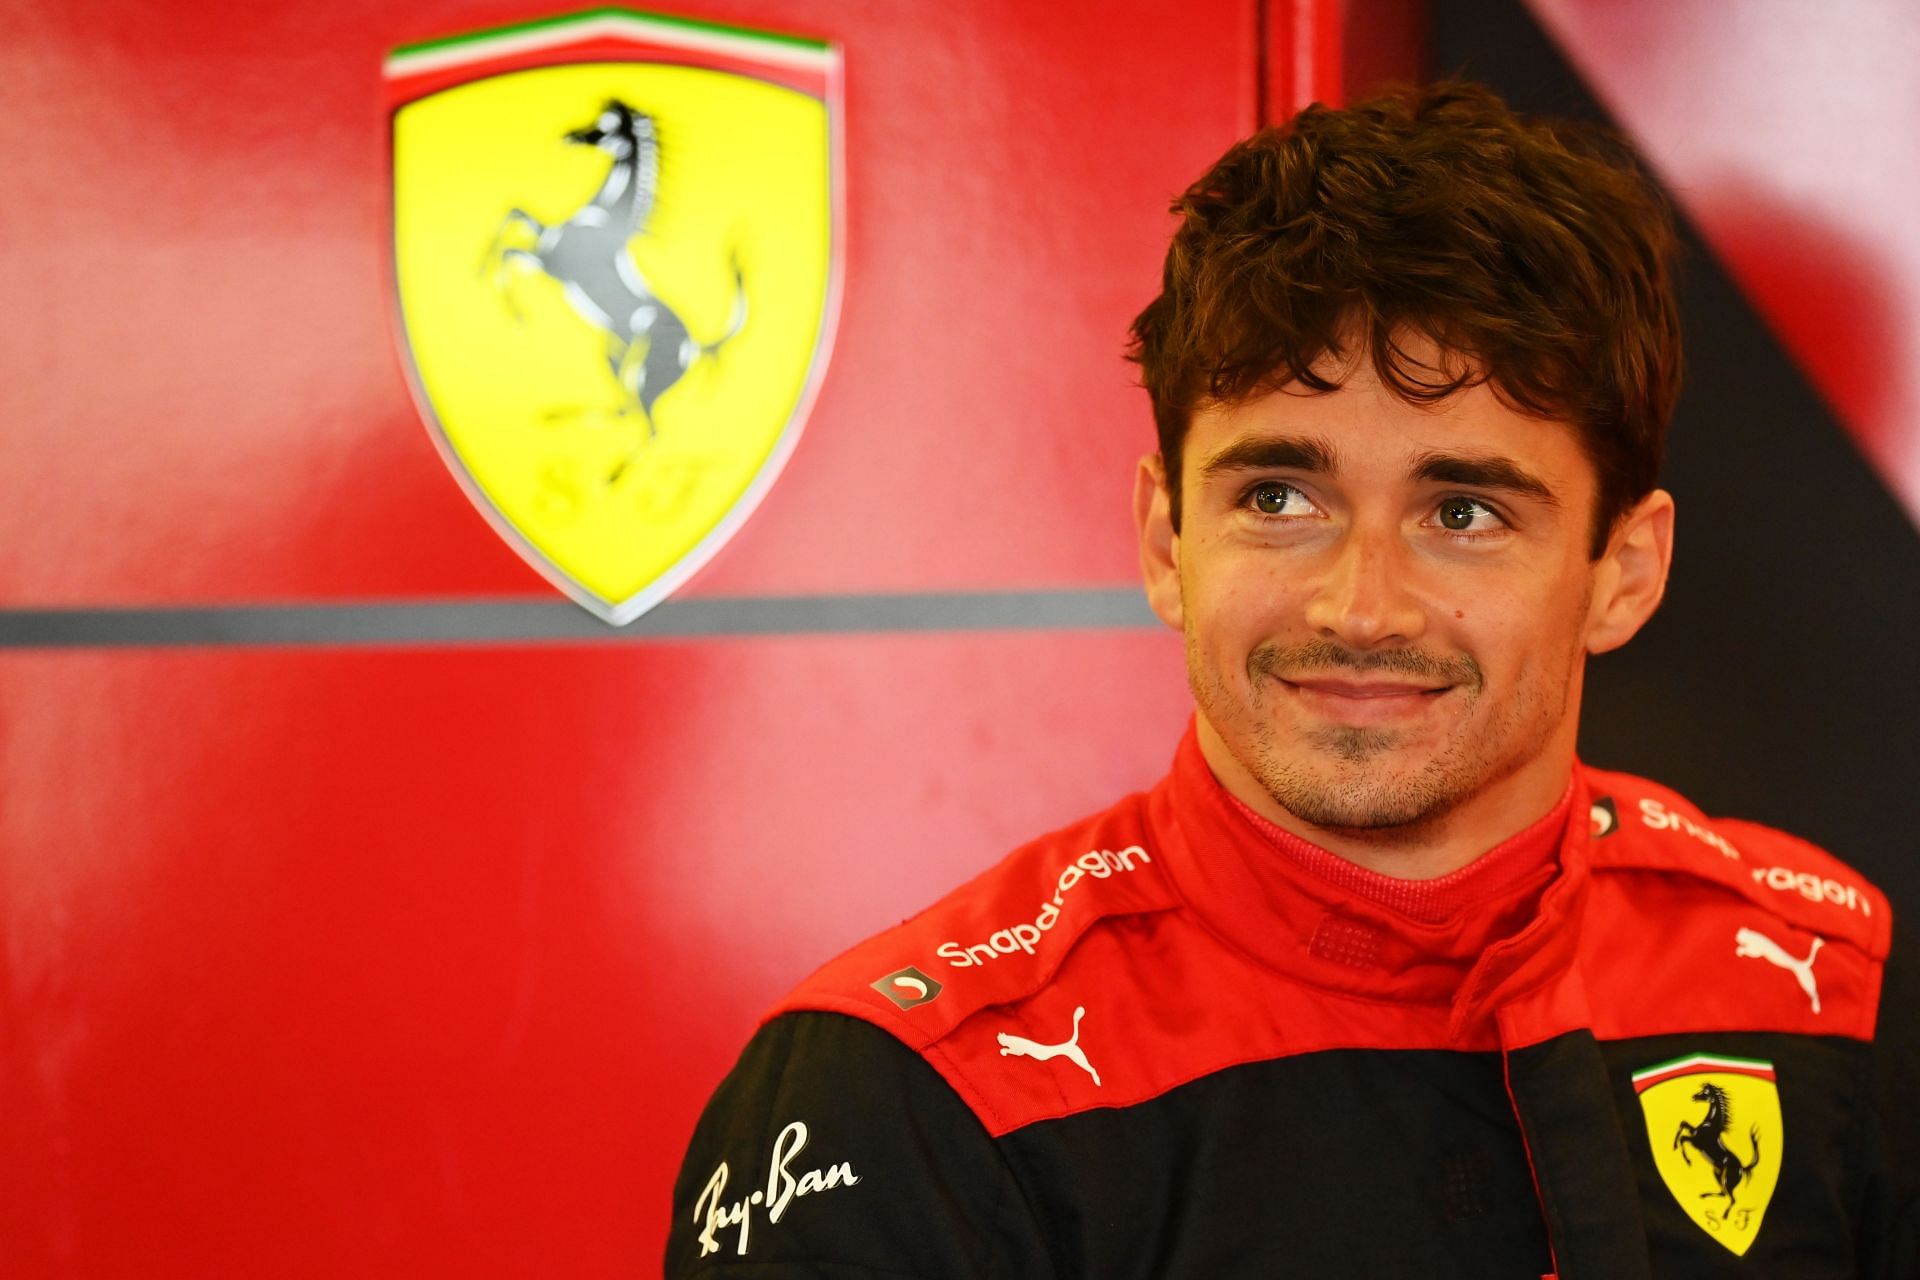 Charles Leclerc at the F1 Grand Prix of Azerbaijan - Final Practice